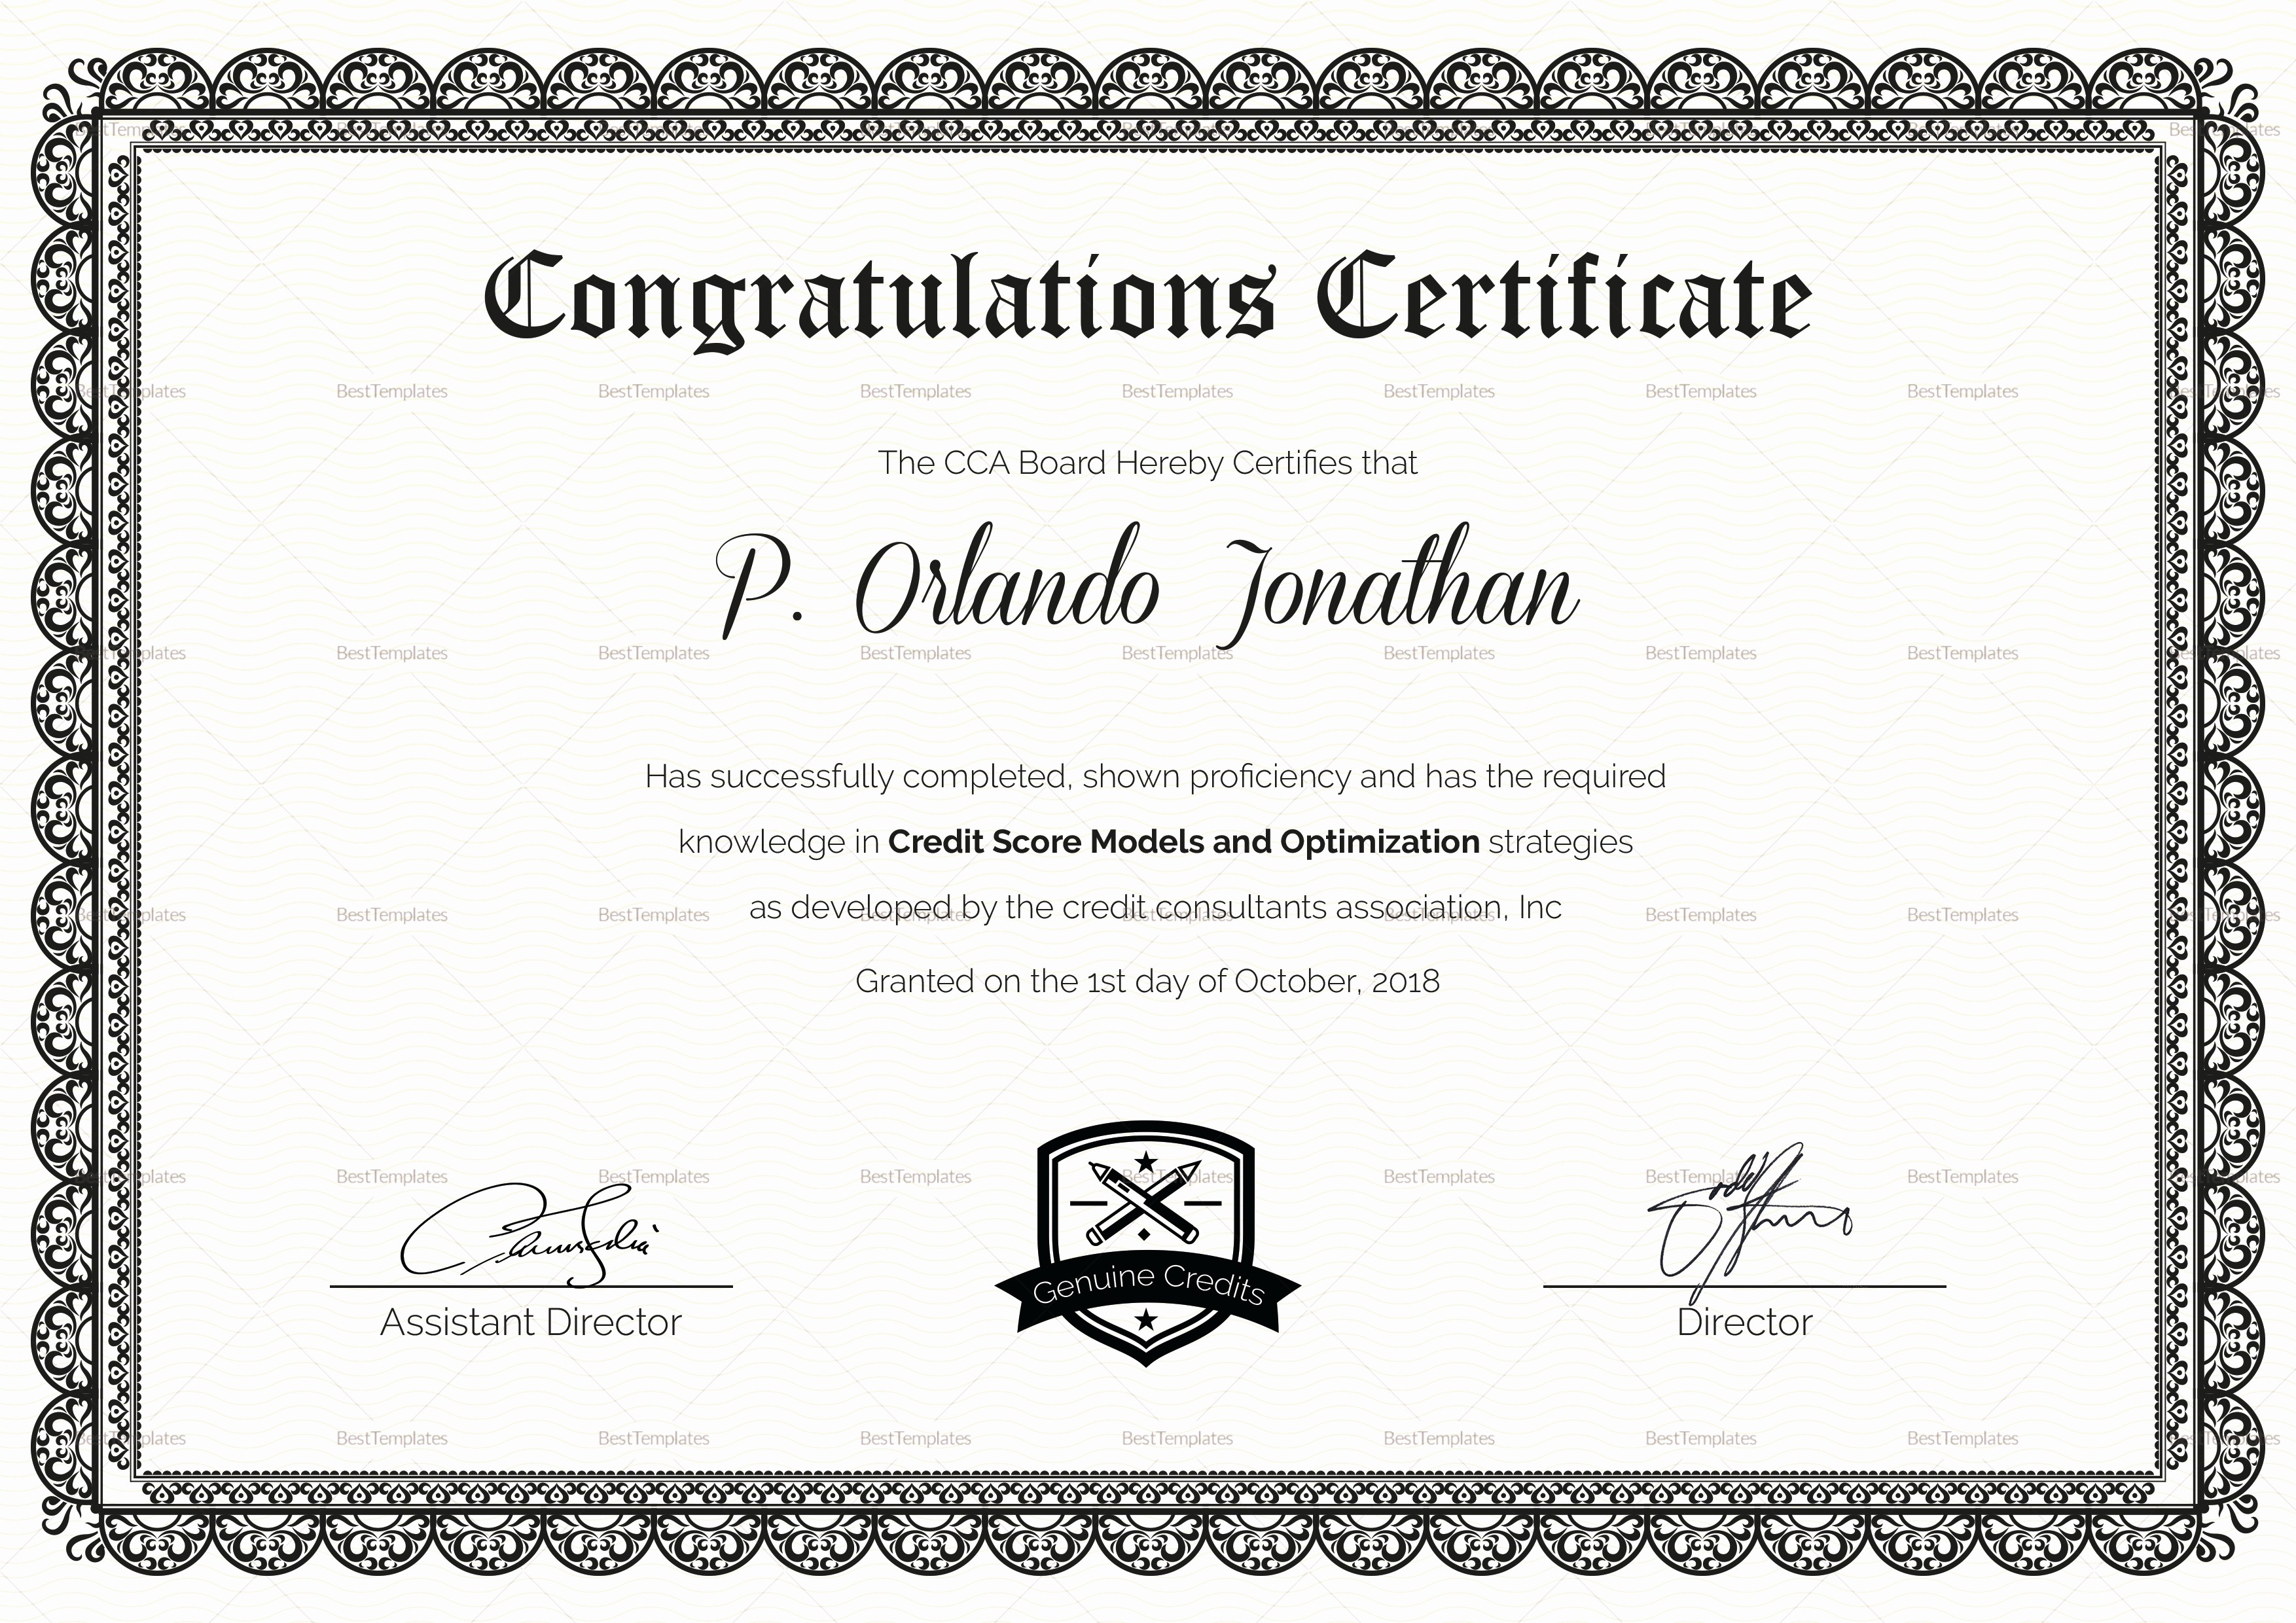 Congratulations You Did It Certificate Beautiful Certificate Congratulations Certificate Congratulations